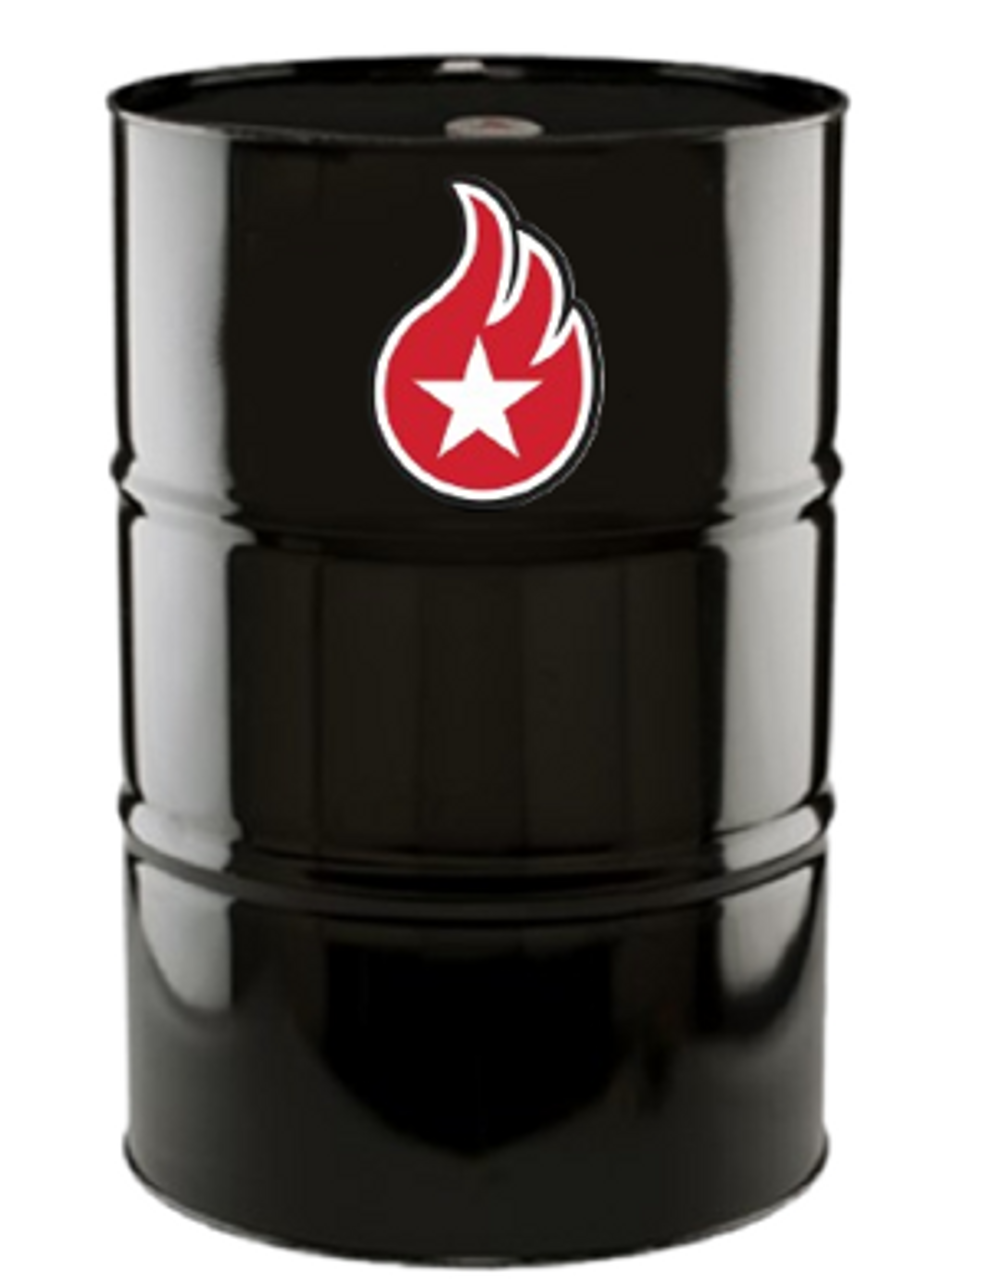 Starfire Dot 3 Brake Fluid - 55 Gallon Drum